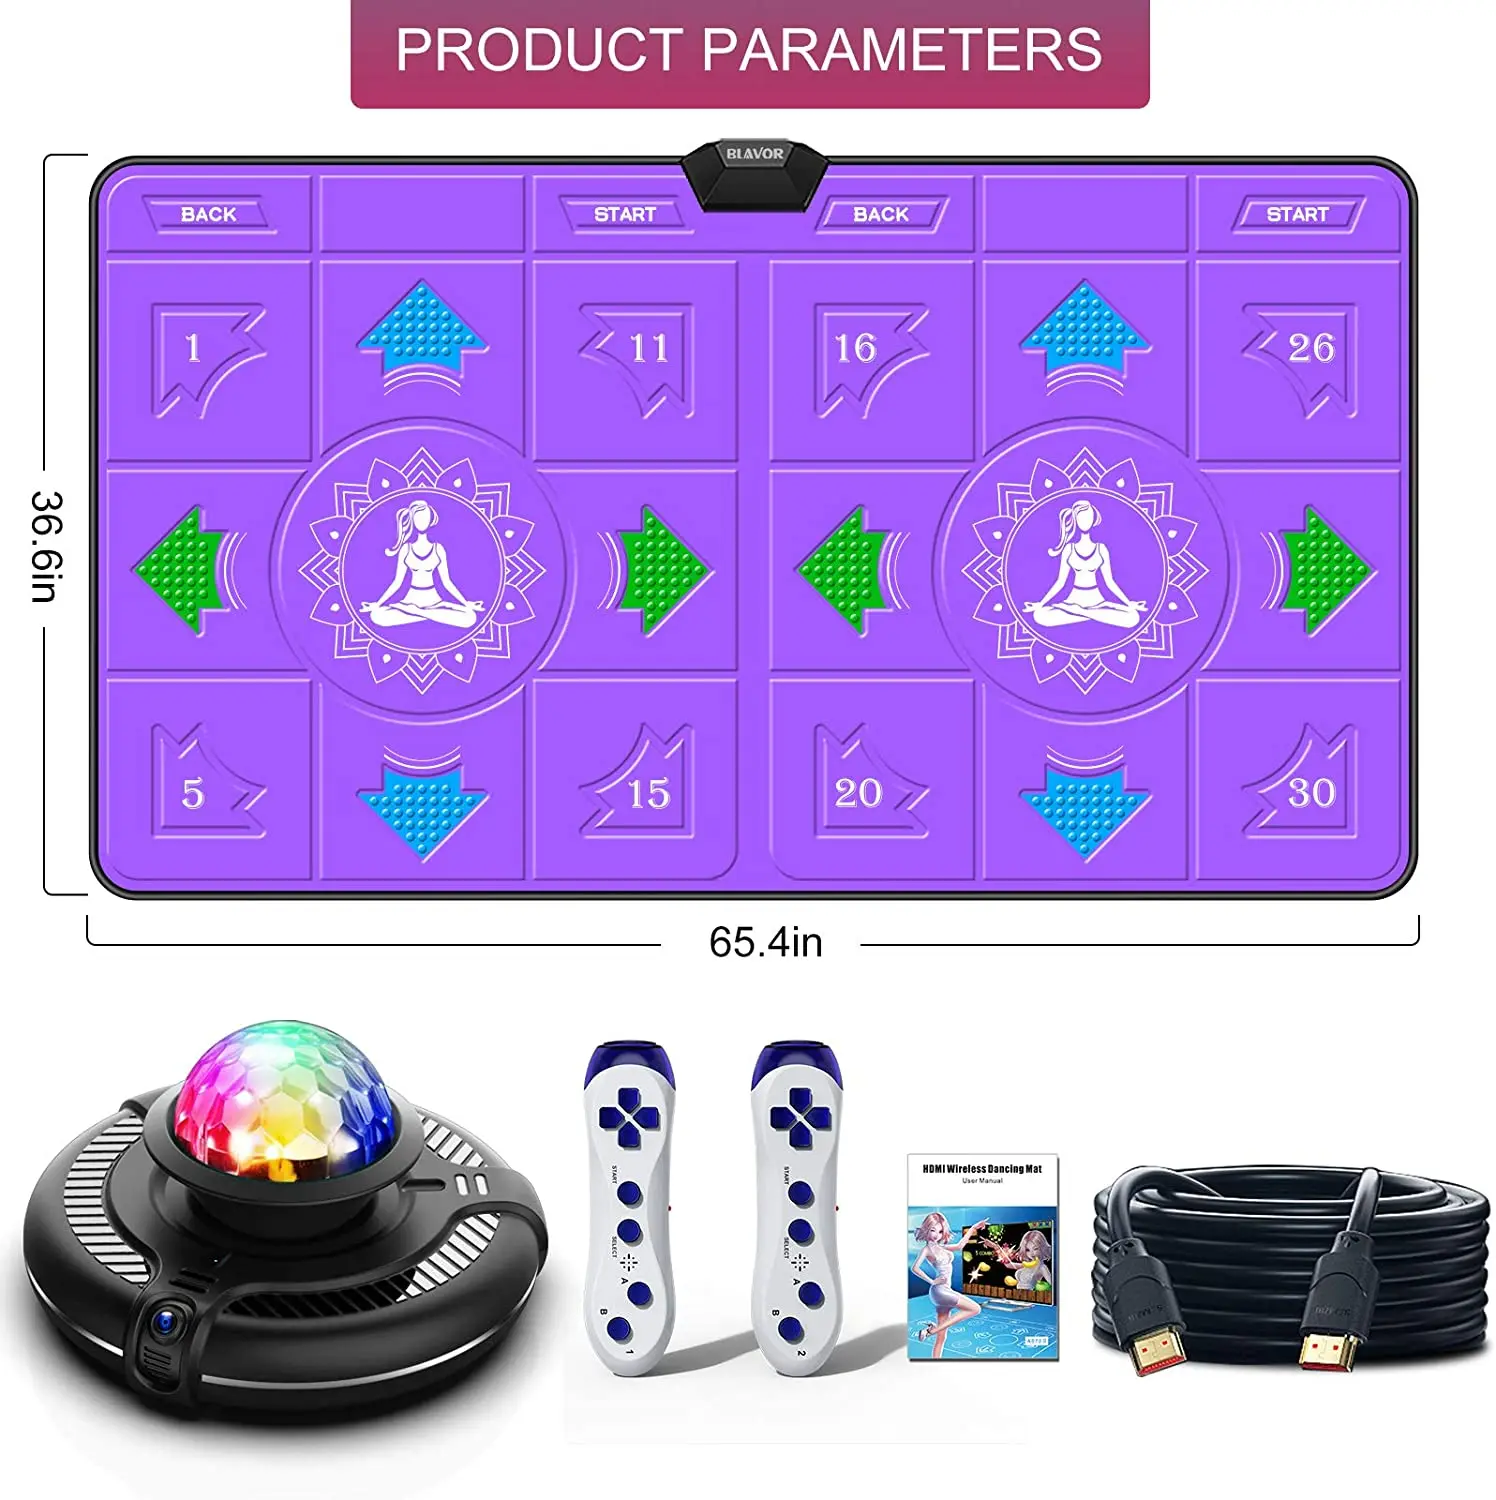 HDMI TV Computer Wireless slimming Yoga Dance Mat Game for Adult Kids Boys Girls Dance Floor Portable Musical Blanket Pad